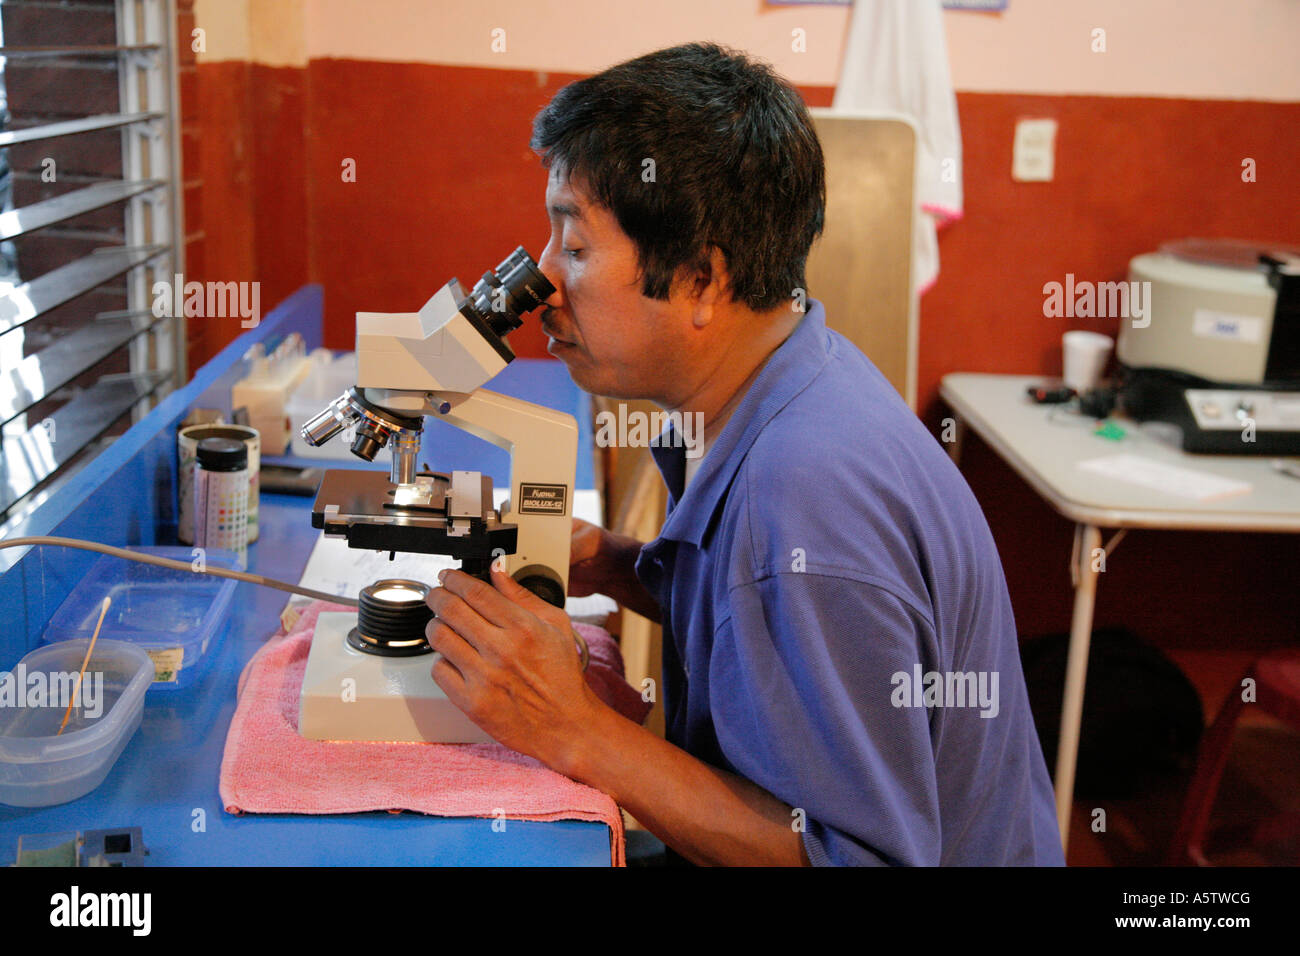 Painet jj1531 Guatemala Medic Blutprobe unter Mikroskop Klinik Catarina Lateinamerika zentrale Americas Health zu prüfen Stockfoto